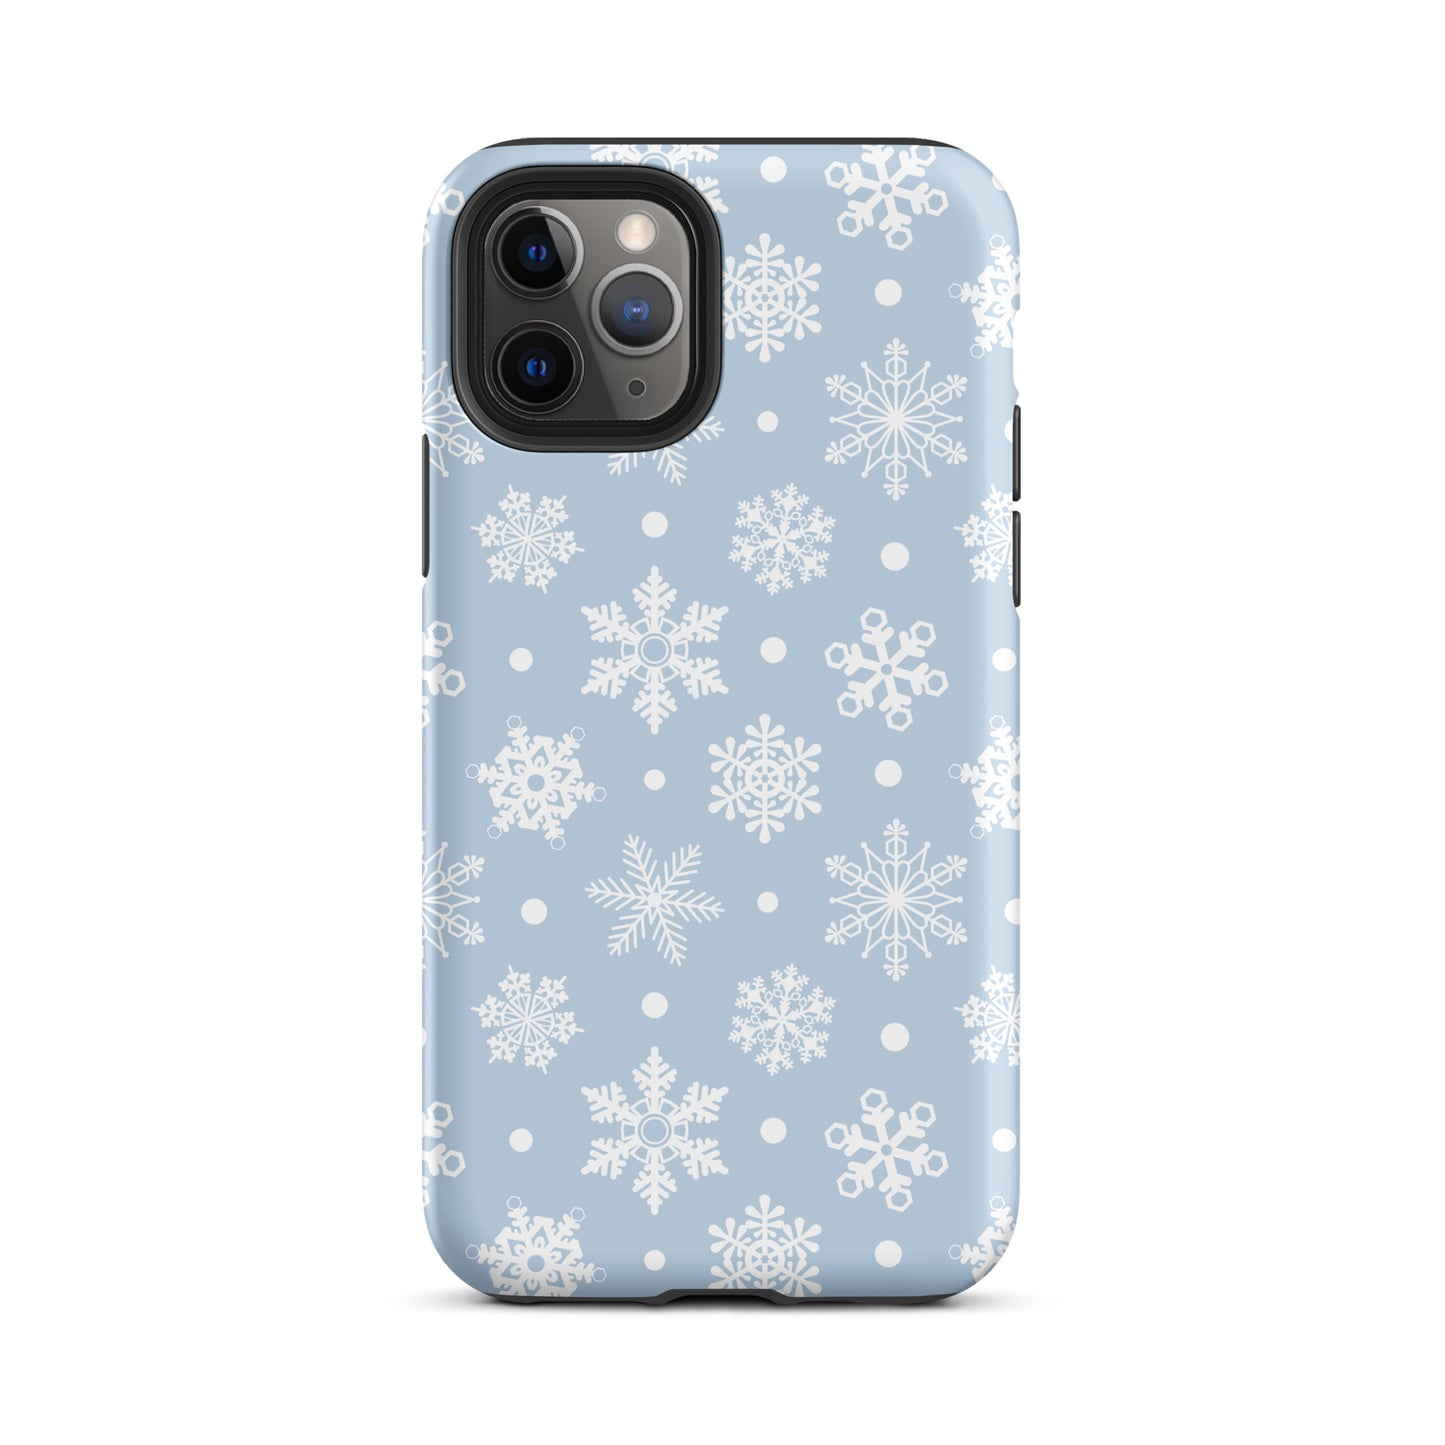 Snowflakes iPhone Case iPhone 11 Pro Matte